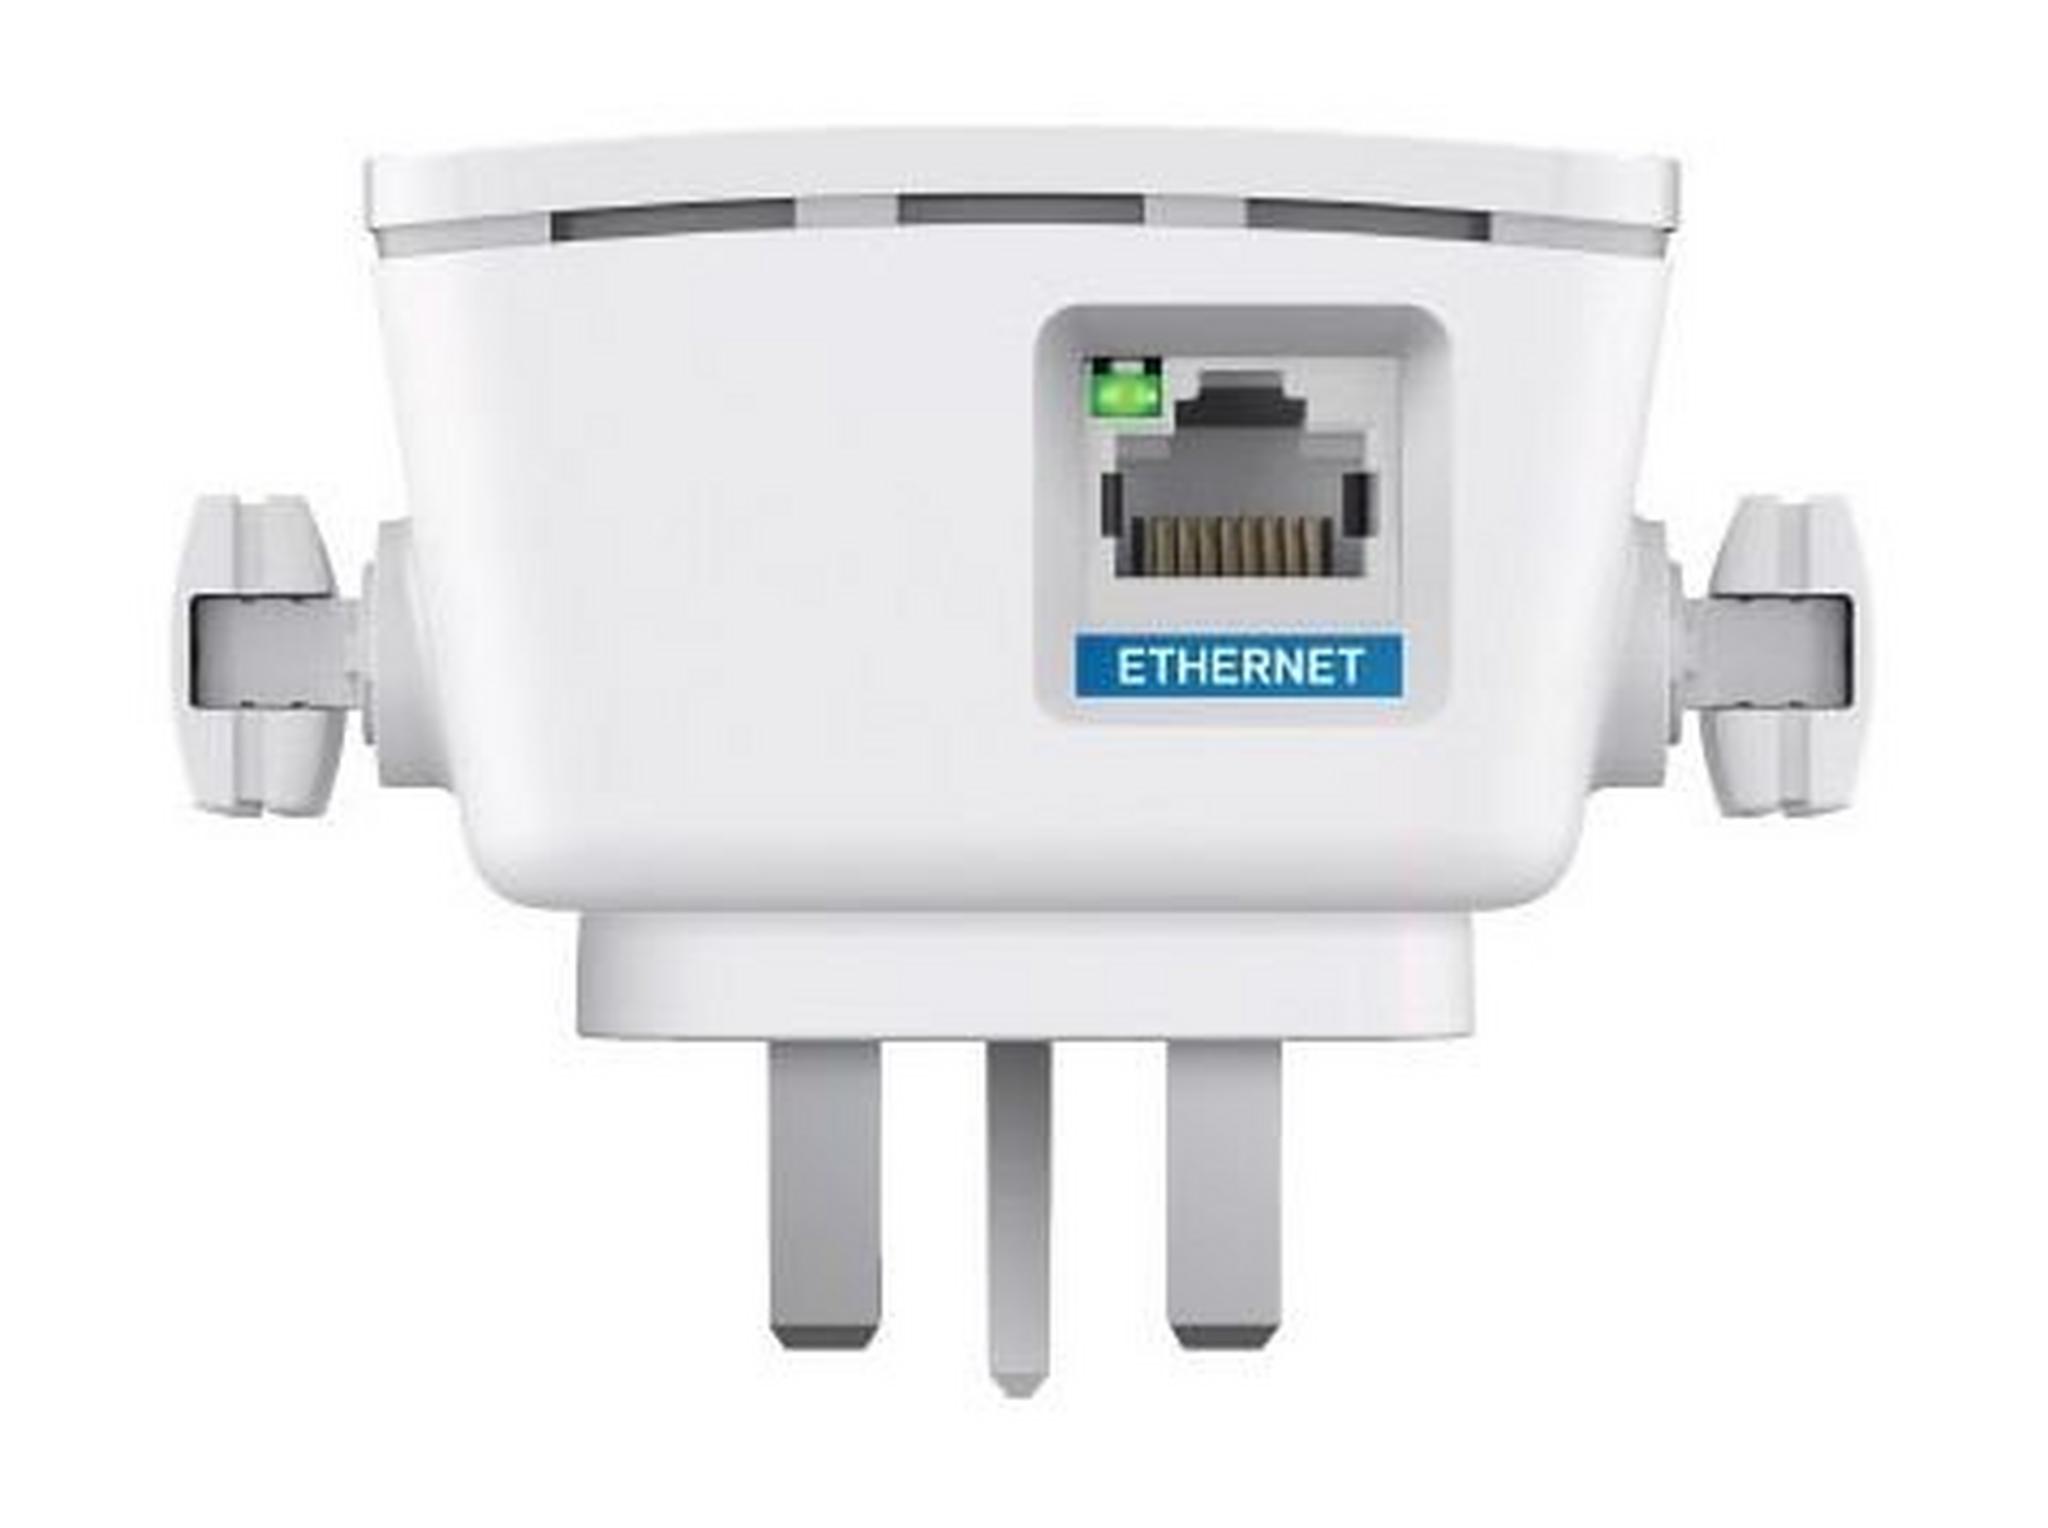 Linksys AC750 733Mbps Dual-Band Wireless Access Point (WAP750AC-ME) - White